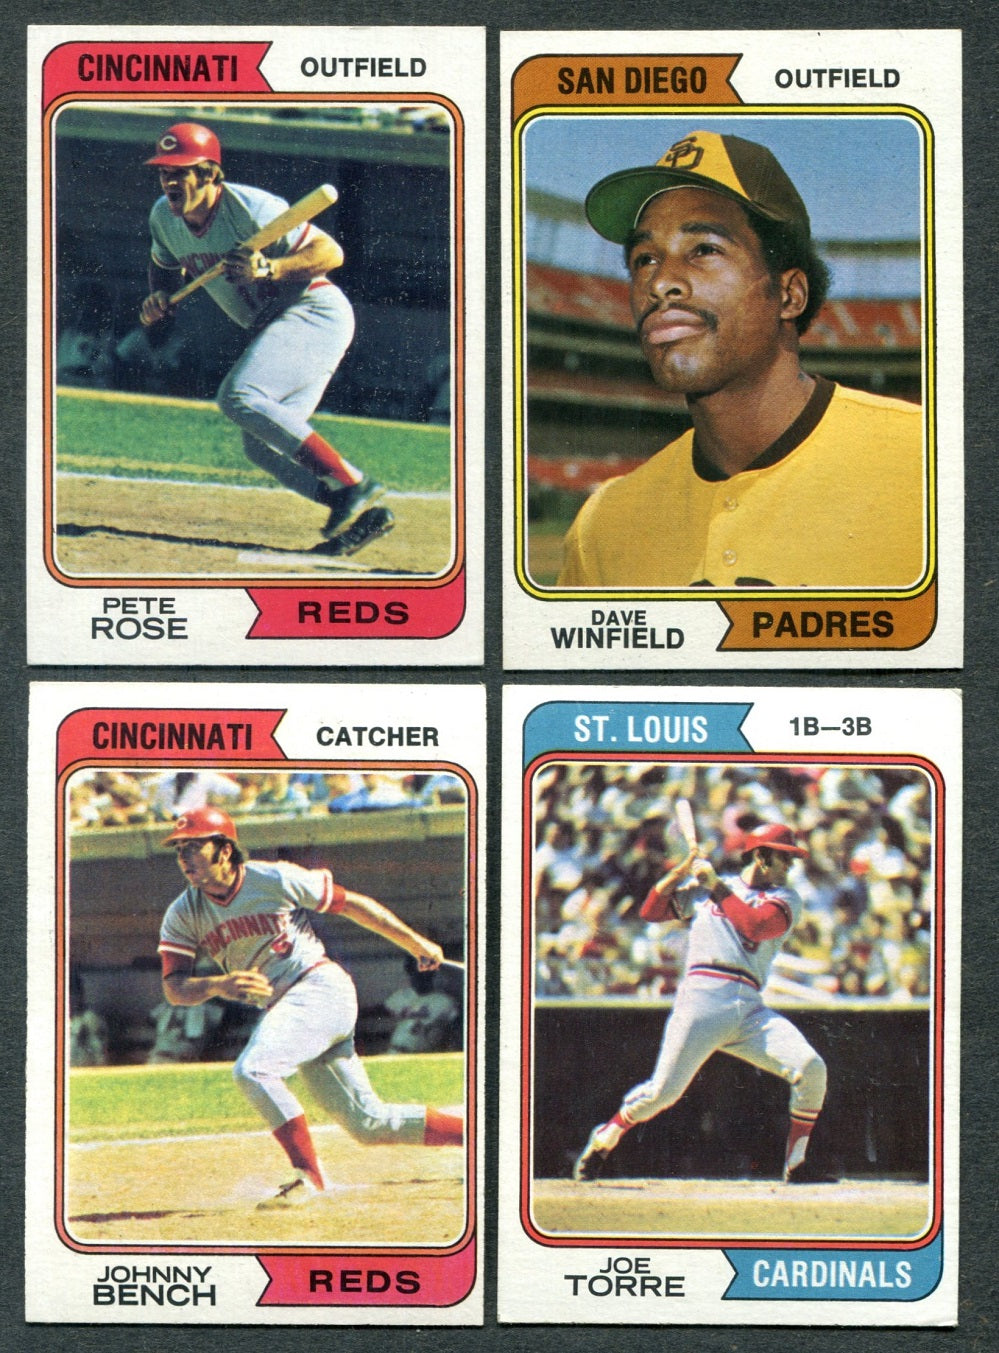 1974 Topps Baseball Complete Set VG/EX EX/MT (660) (24-368)